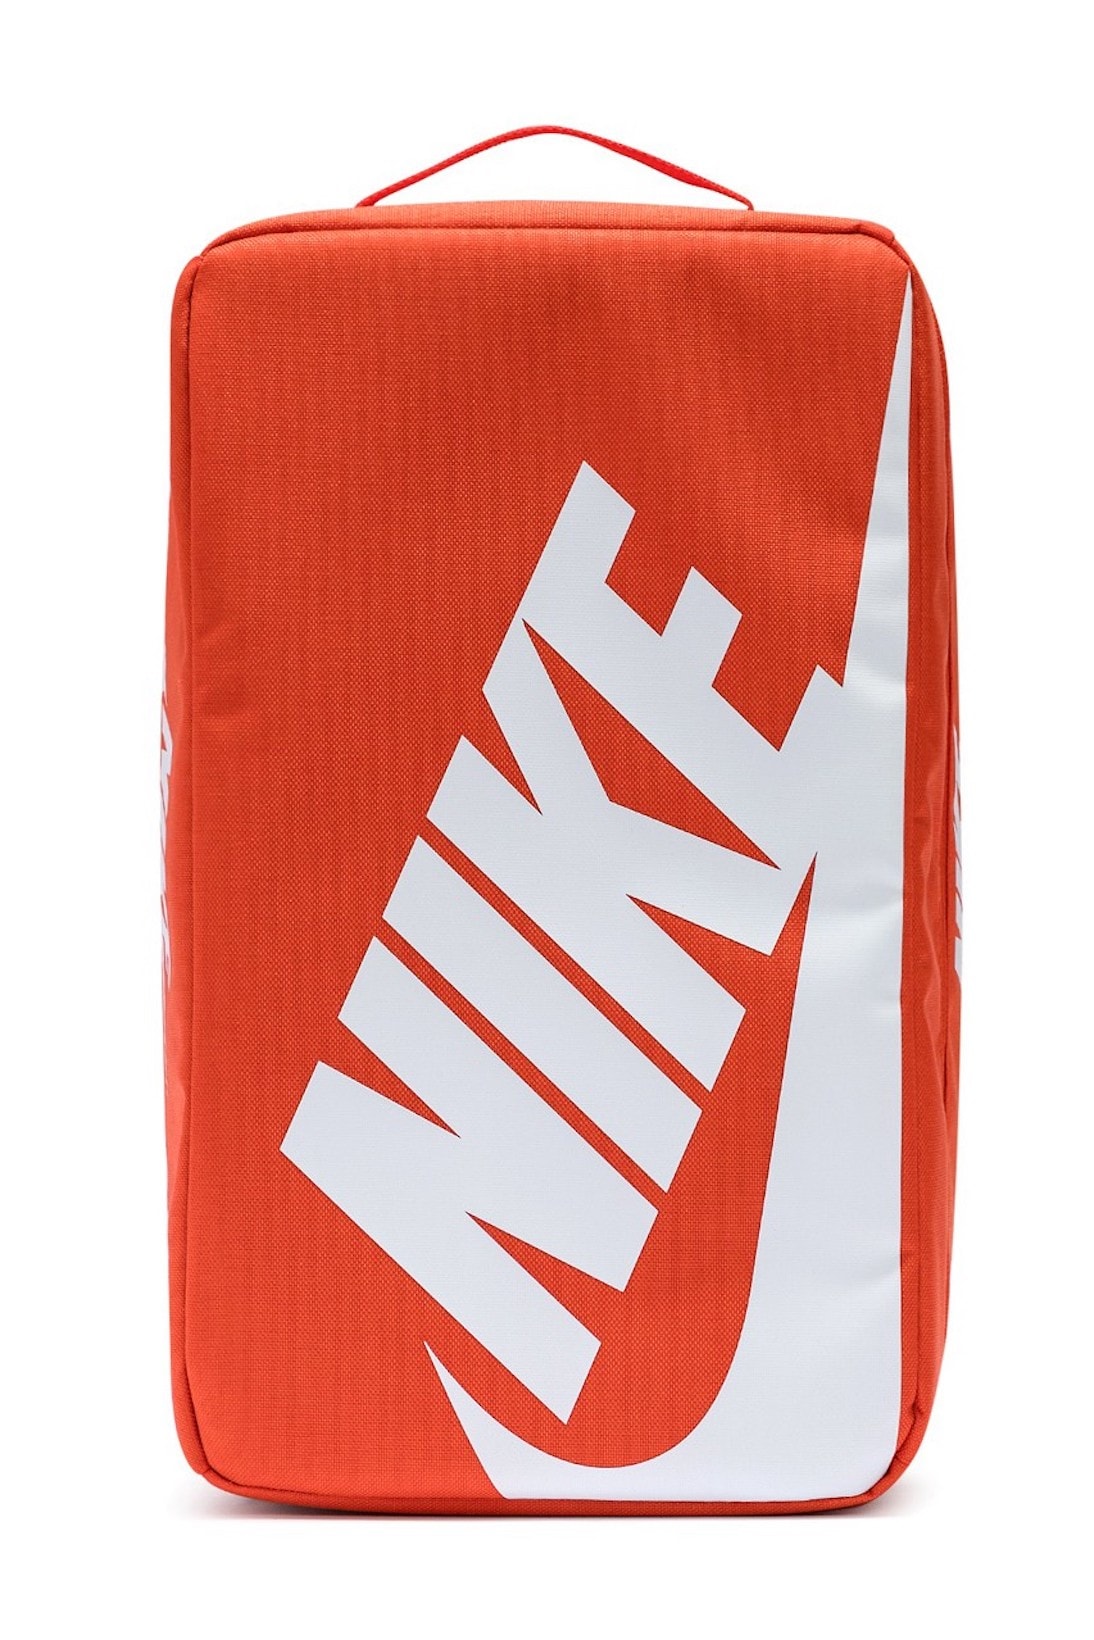 nike sportswear shoebox bag orange white front